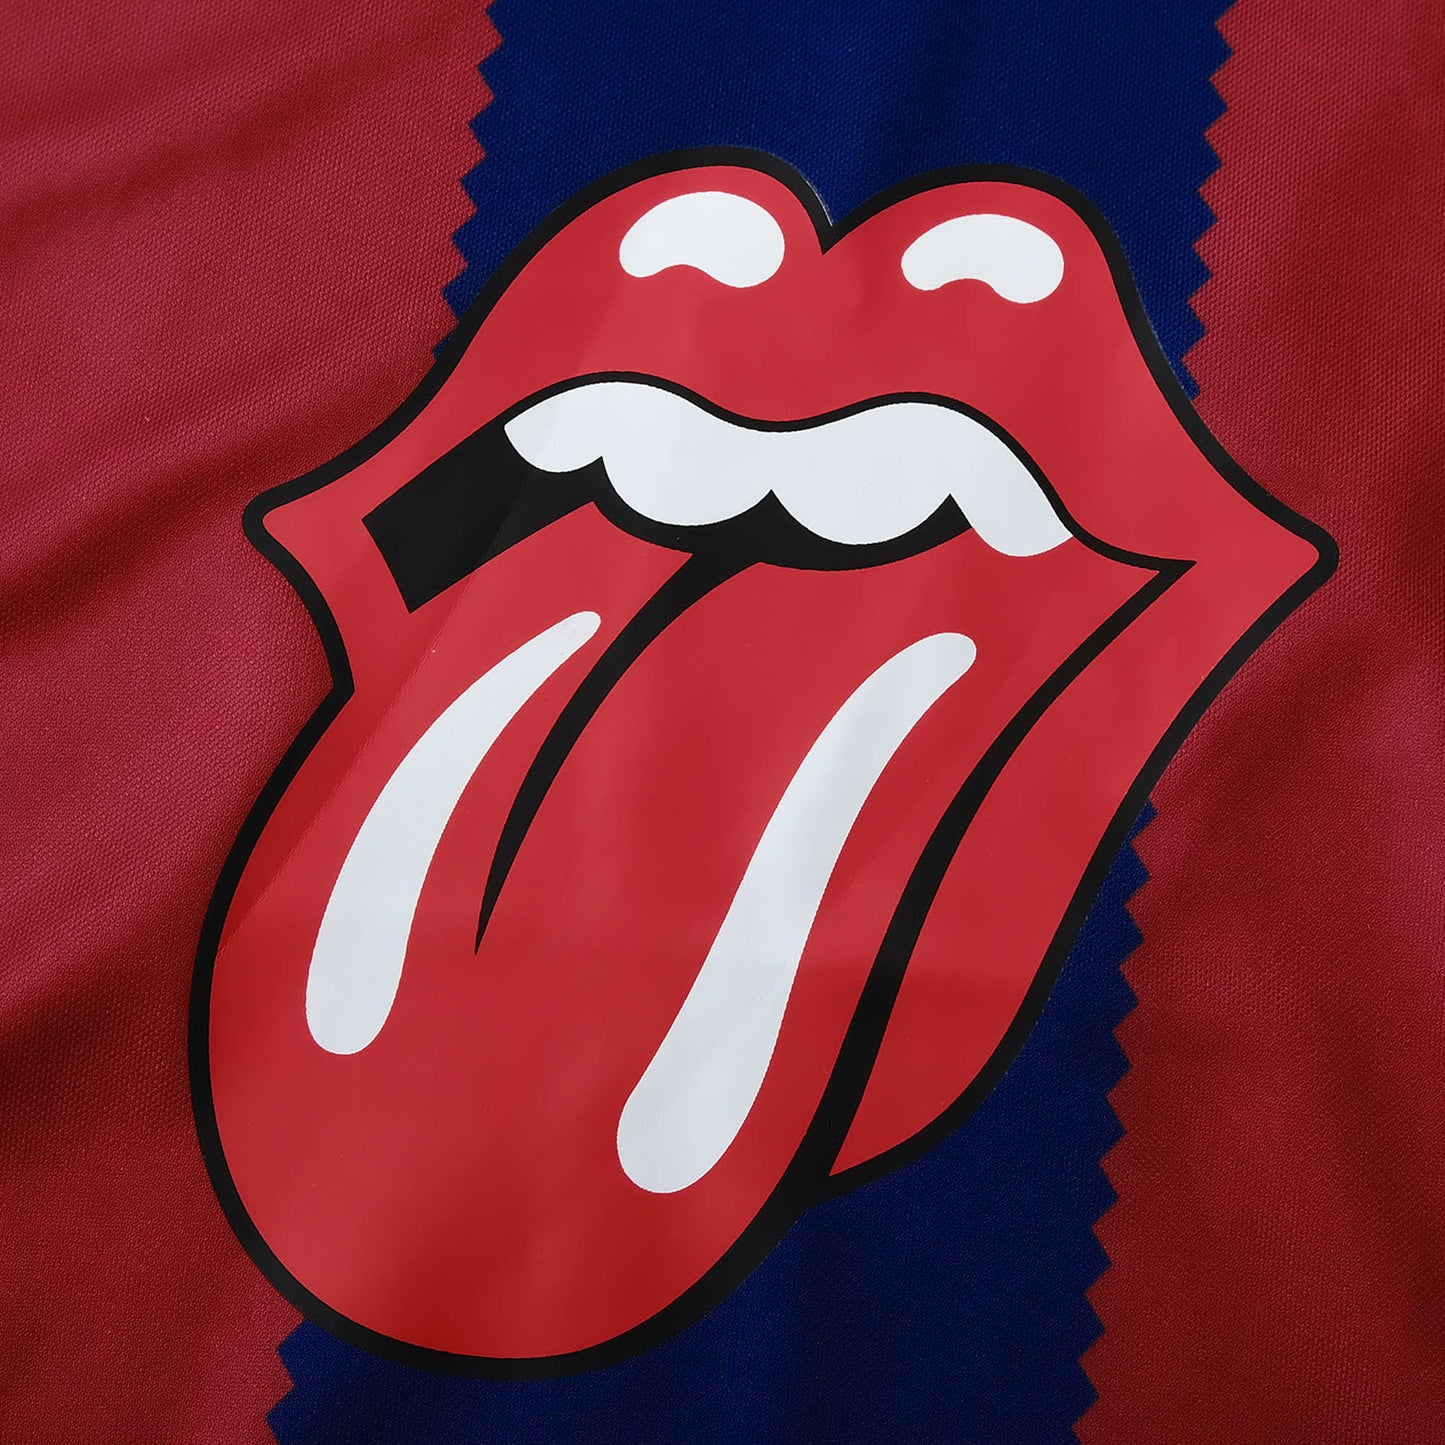 Barcelona 23/24 "Rolling Stones" Jersey